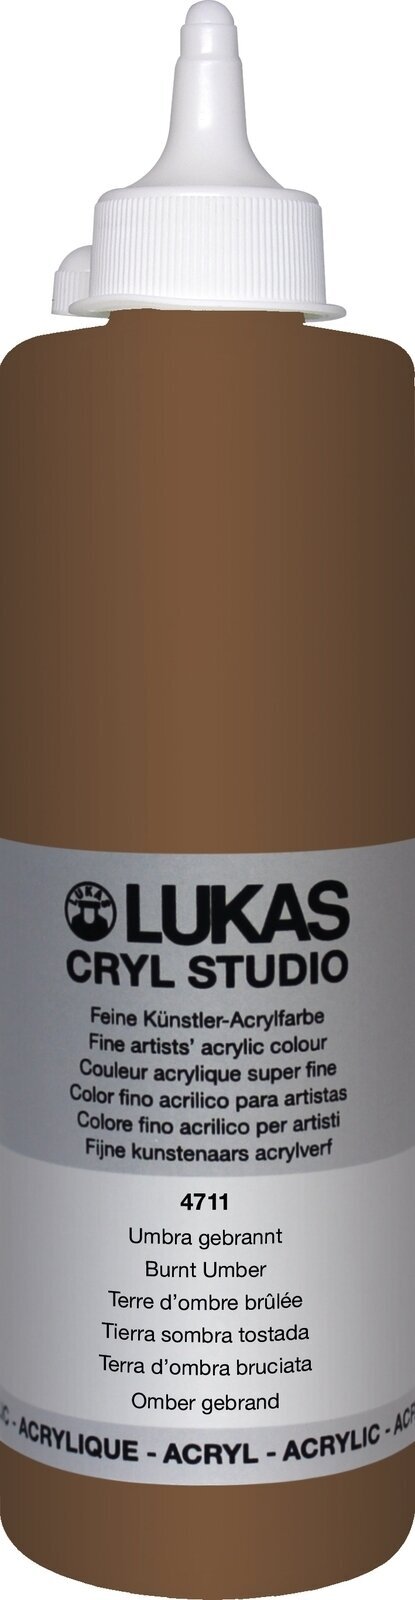 Acrylfarbe Lukas Cryl Studio Acrylic Paint Plastic Bottle Acrylfarbe Burnt Umber 500 ml 1 Stck